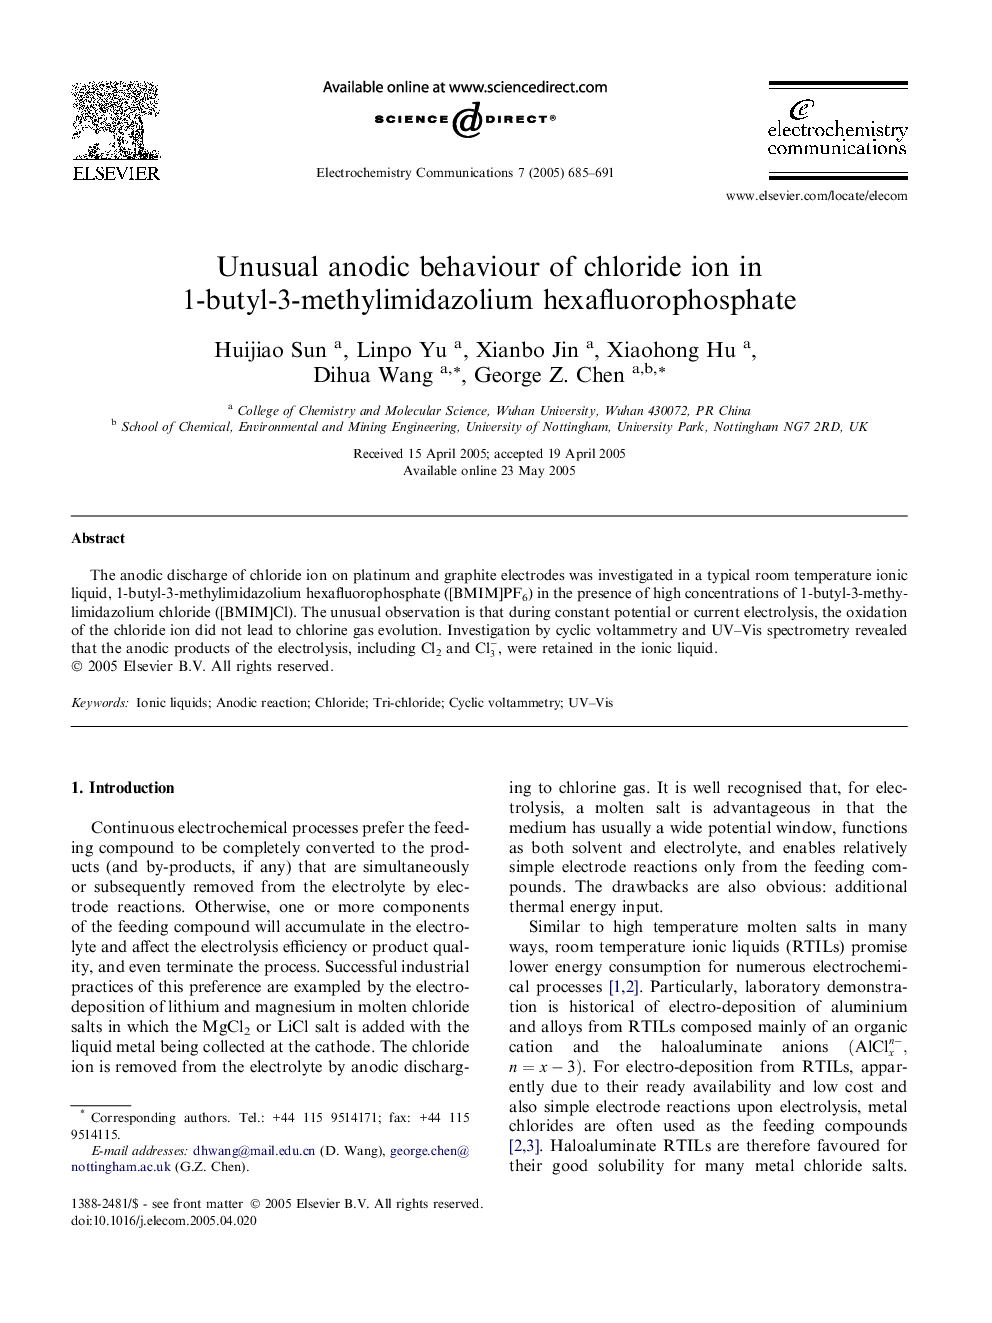 Unusual anodic behaviour of chloride ion in 1-butyl-3-methylimidazolium hexafluorophosphate